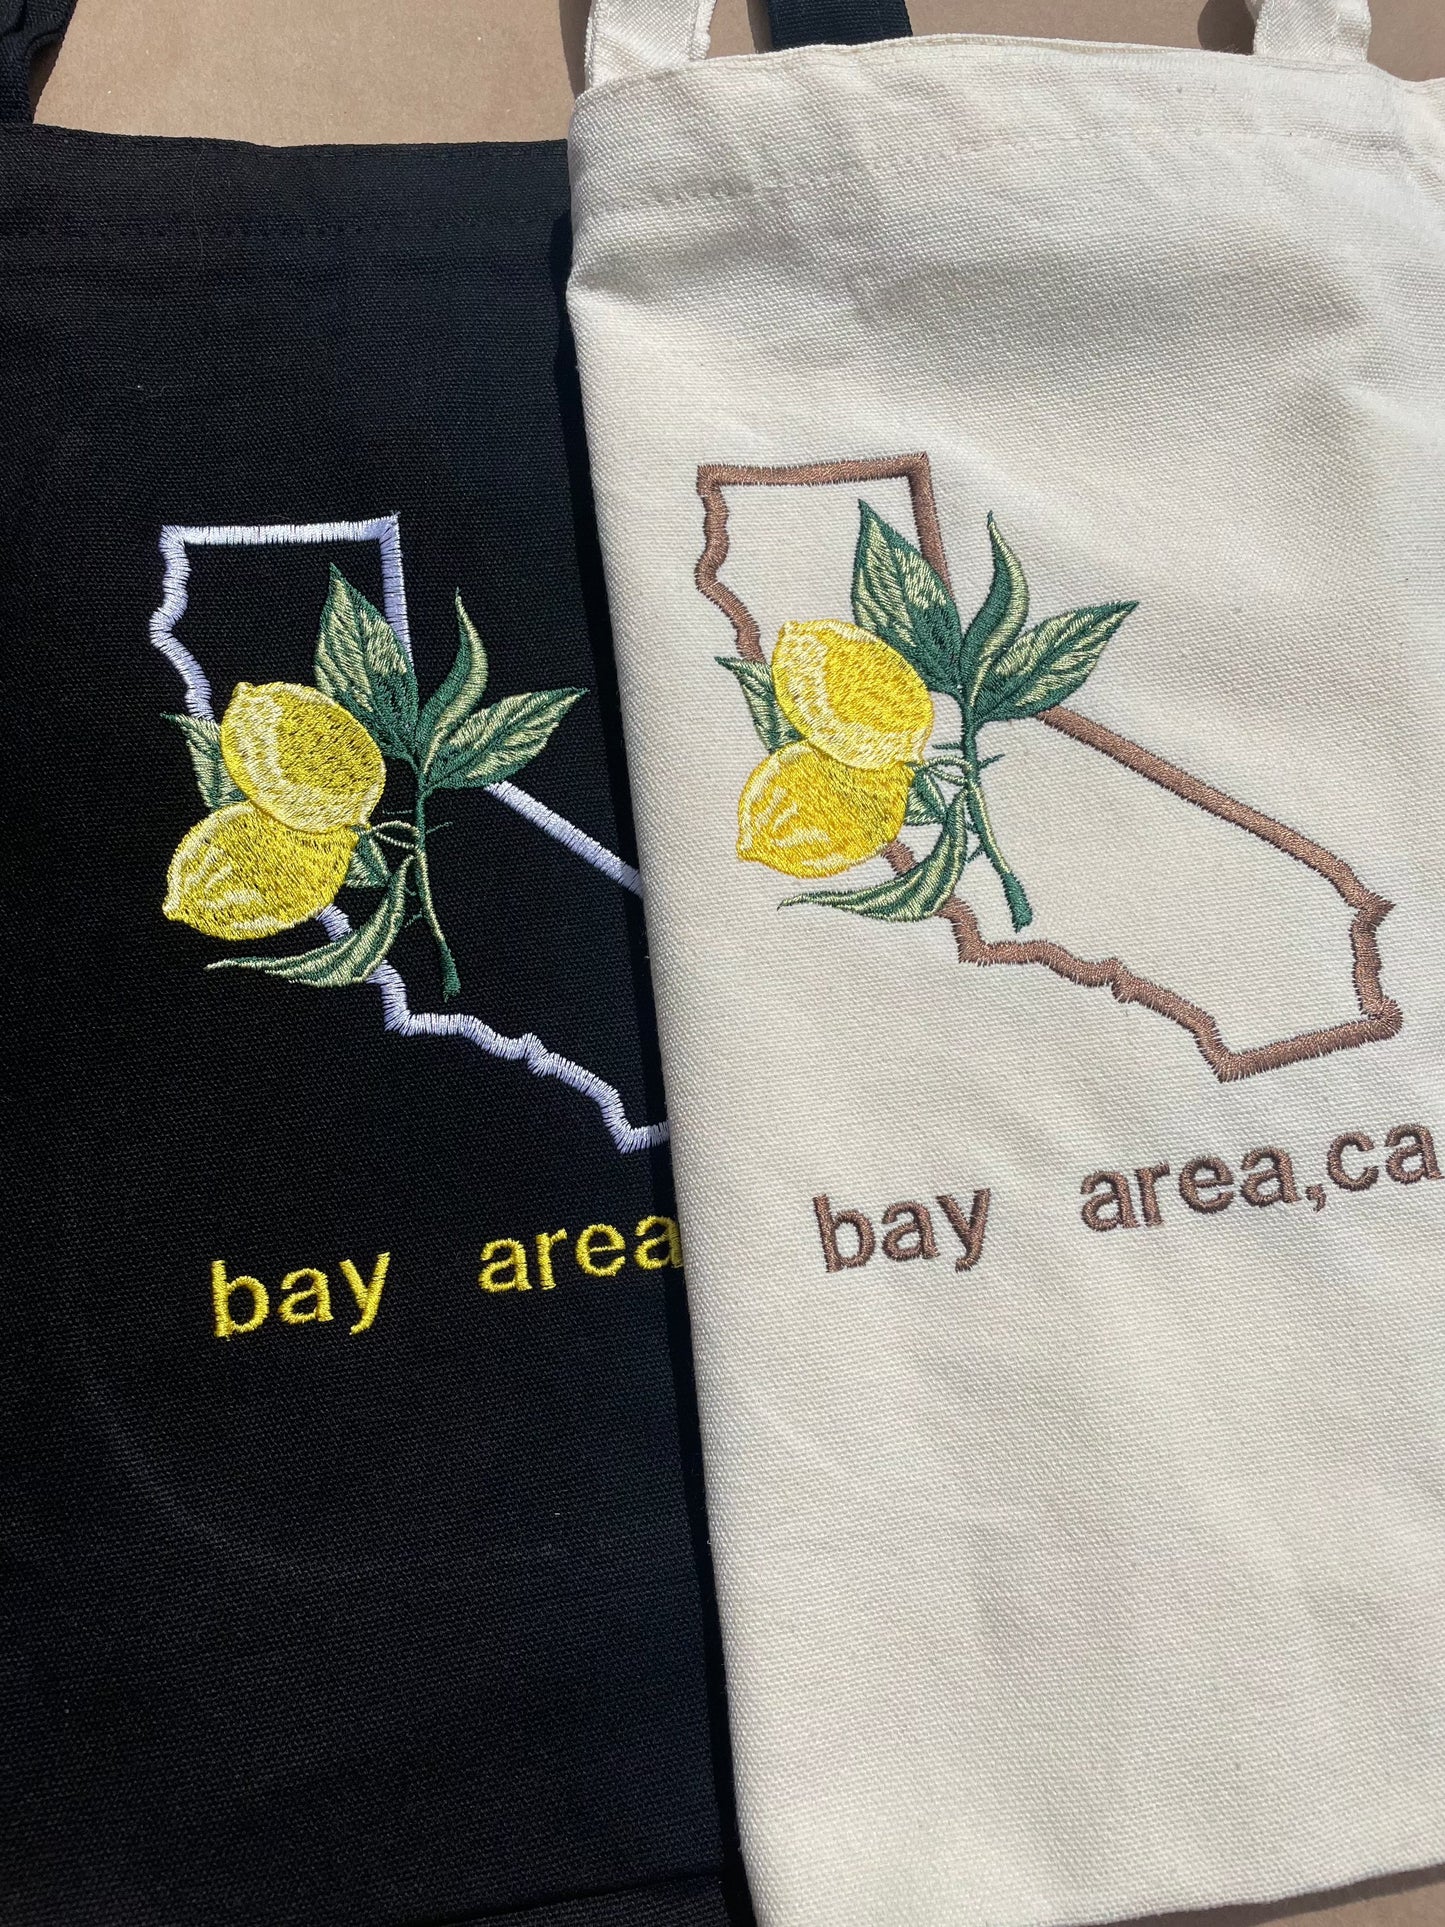 Bay Area, California Large Creme Tote Bag